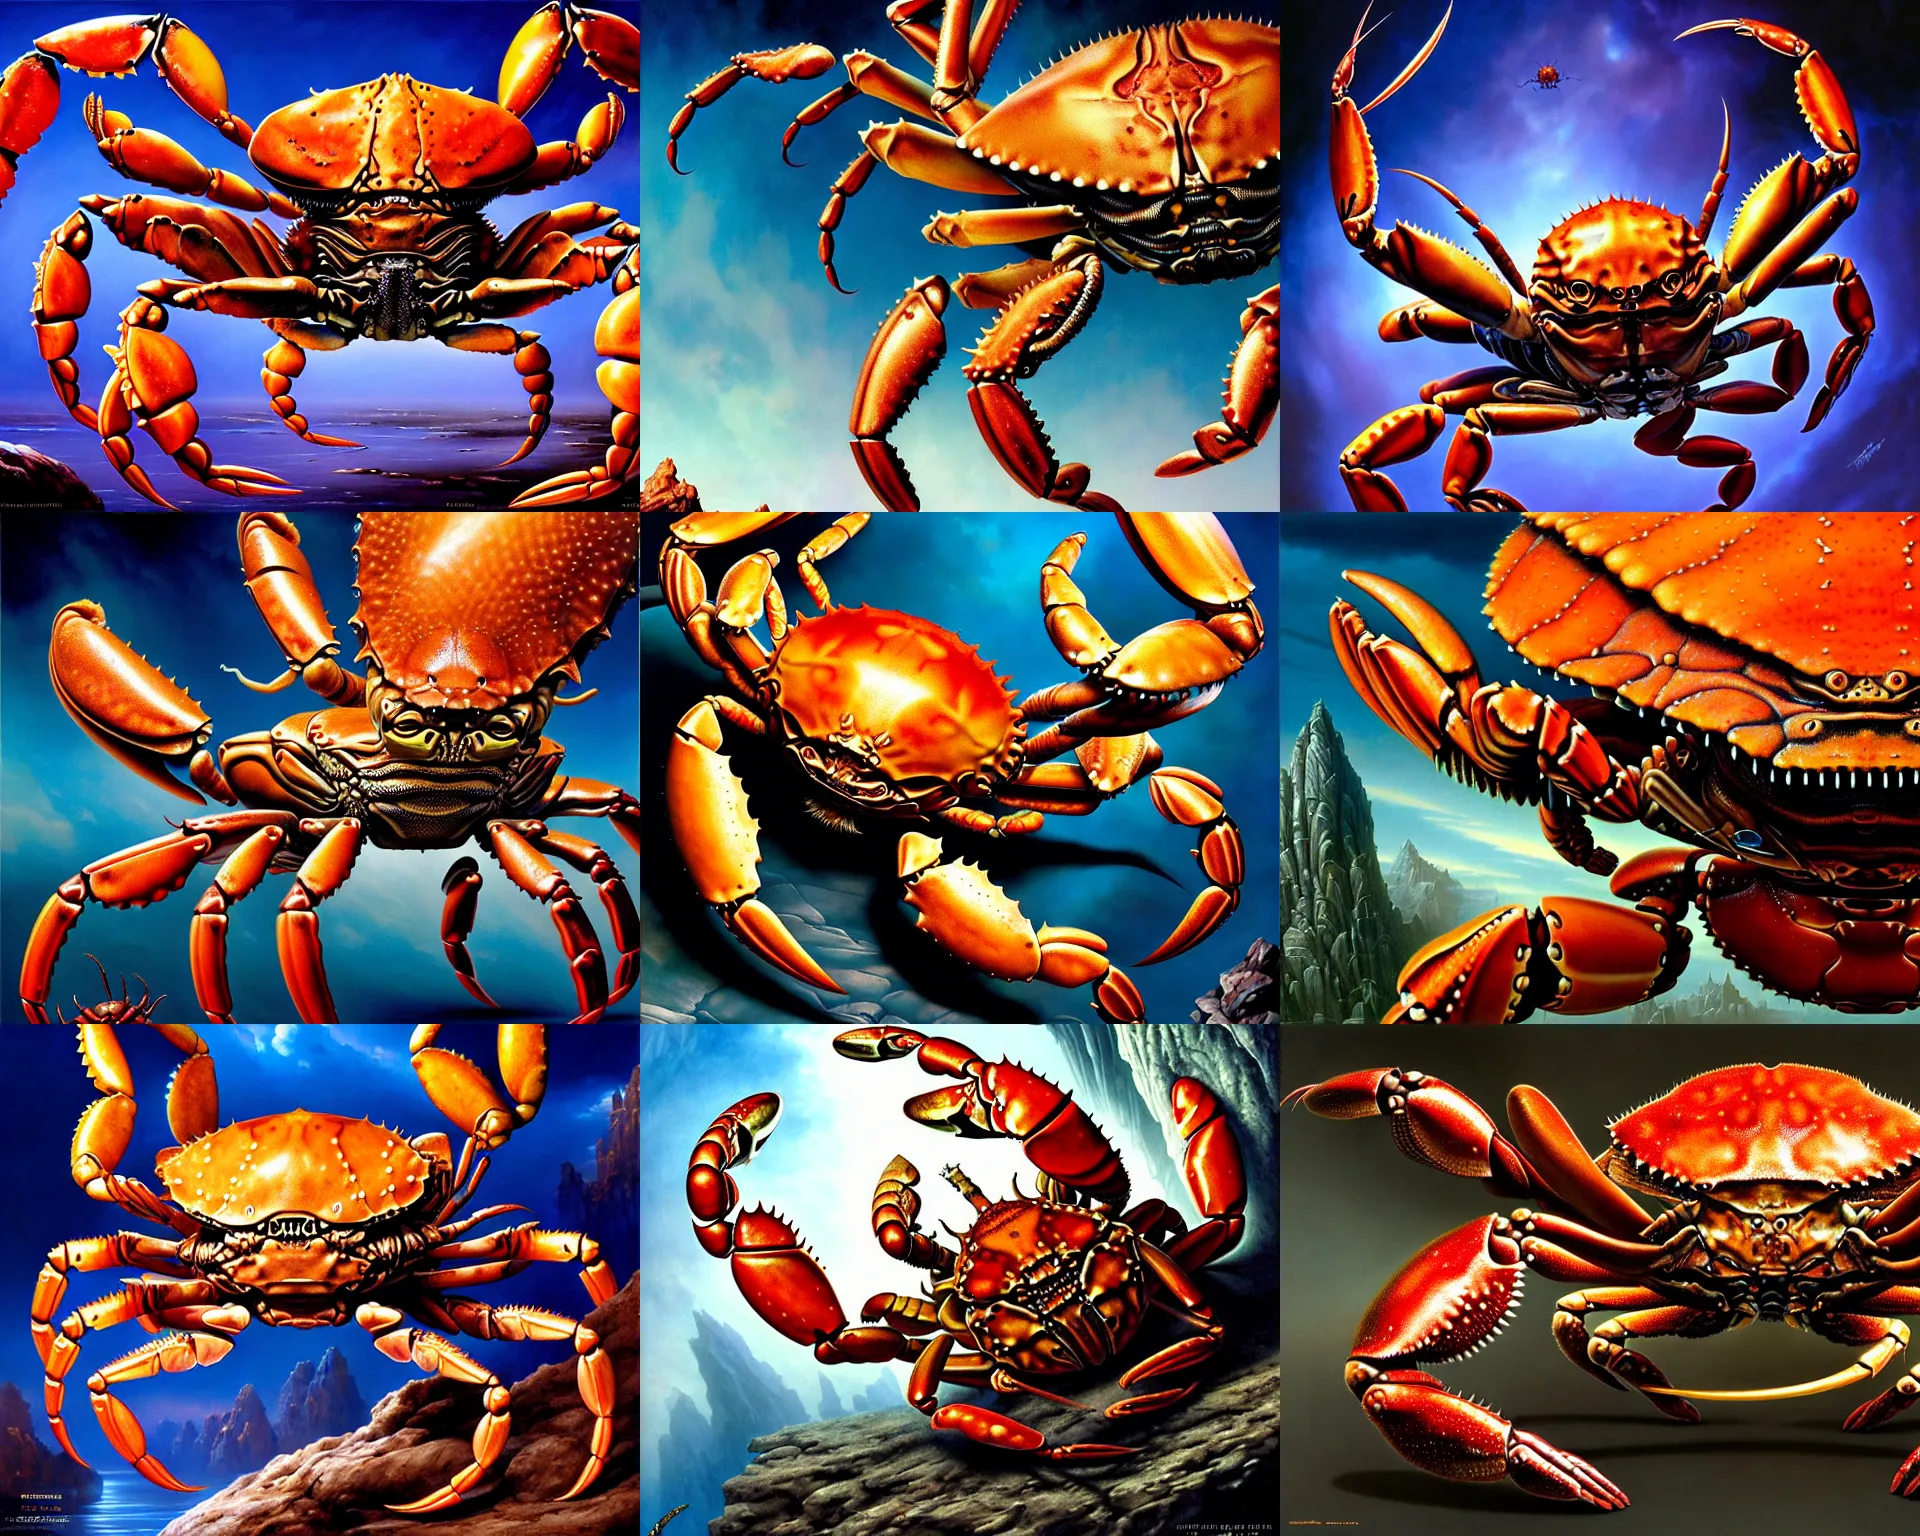 Prompt: a humanoid crab, fantasy art portrait, ultra realistic, cinematic, wide angle, tiger skin, highly detailed by boris vallejo, scott roberston, marco plouffe, neville page, aaron horkey, wayne barlowe, craig mullins, roberto ferri, hajime sorayama